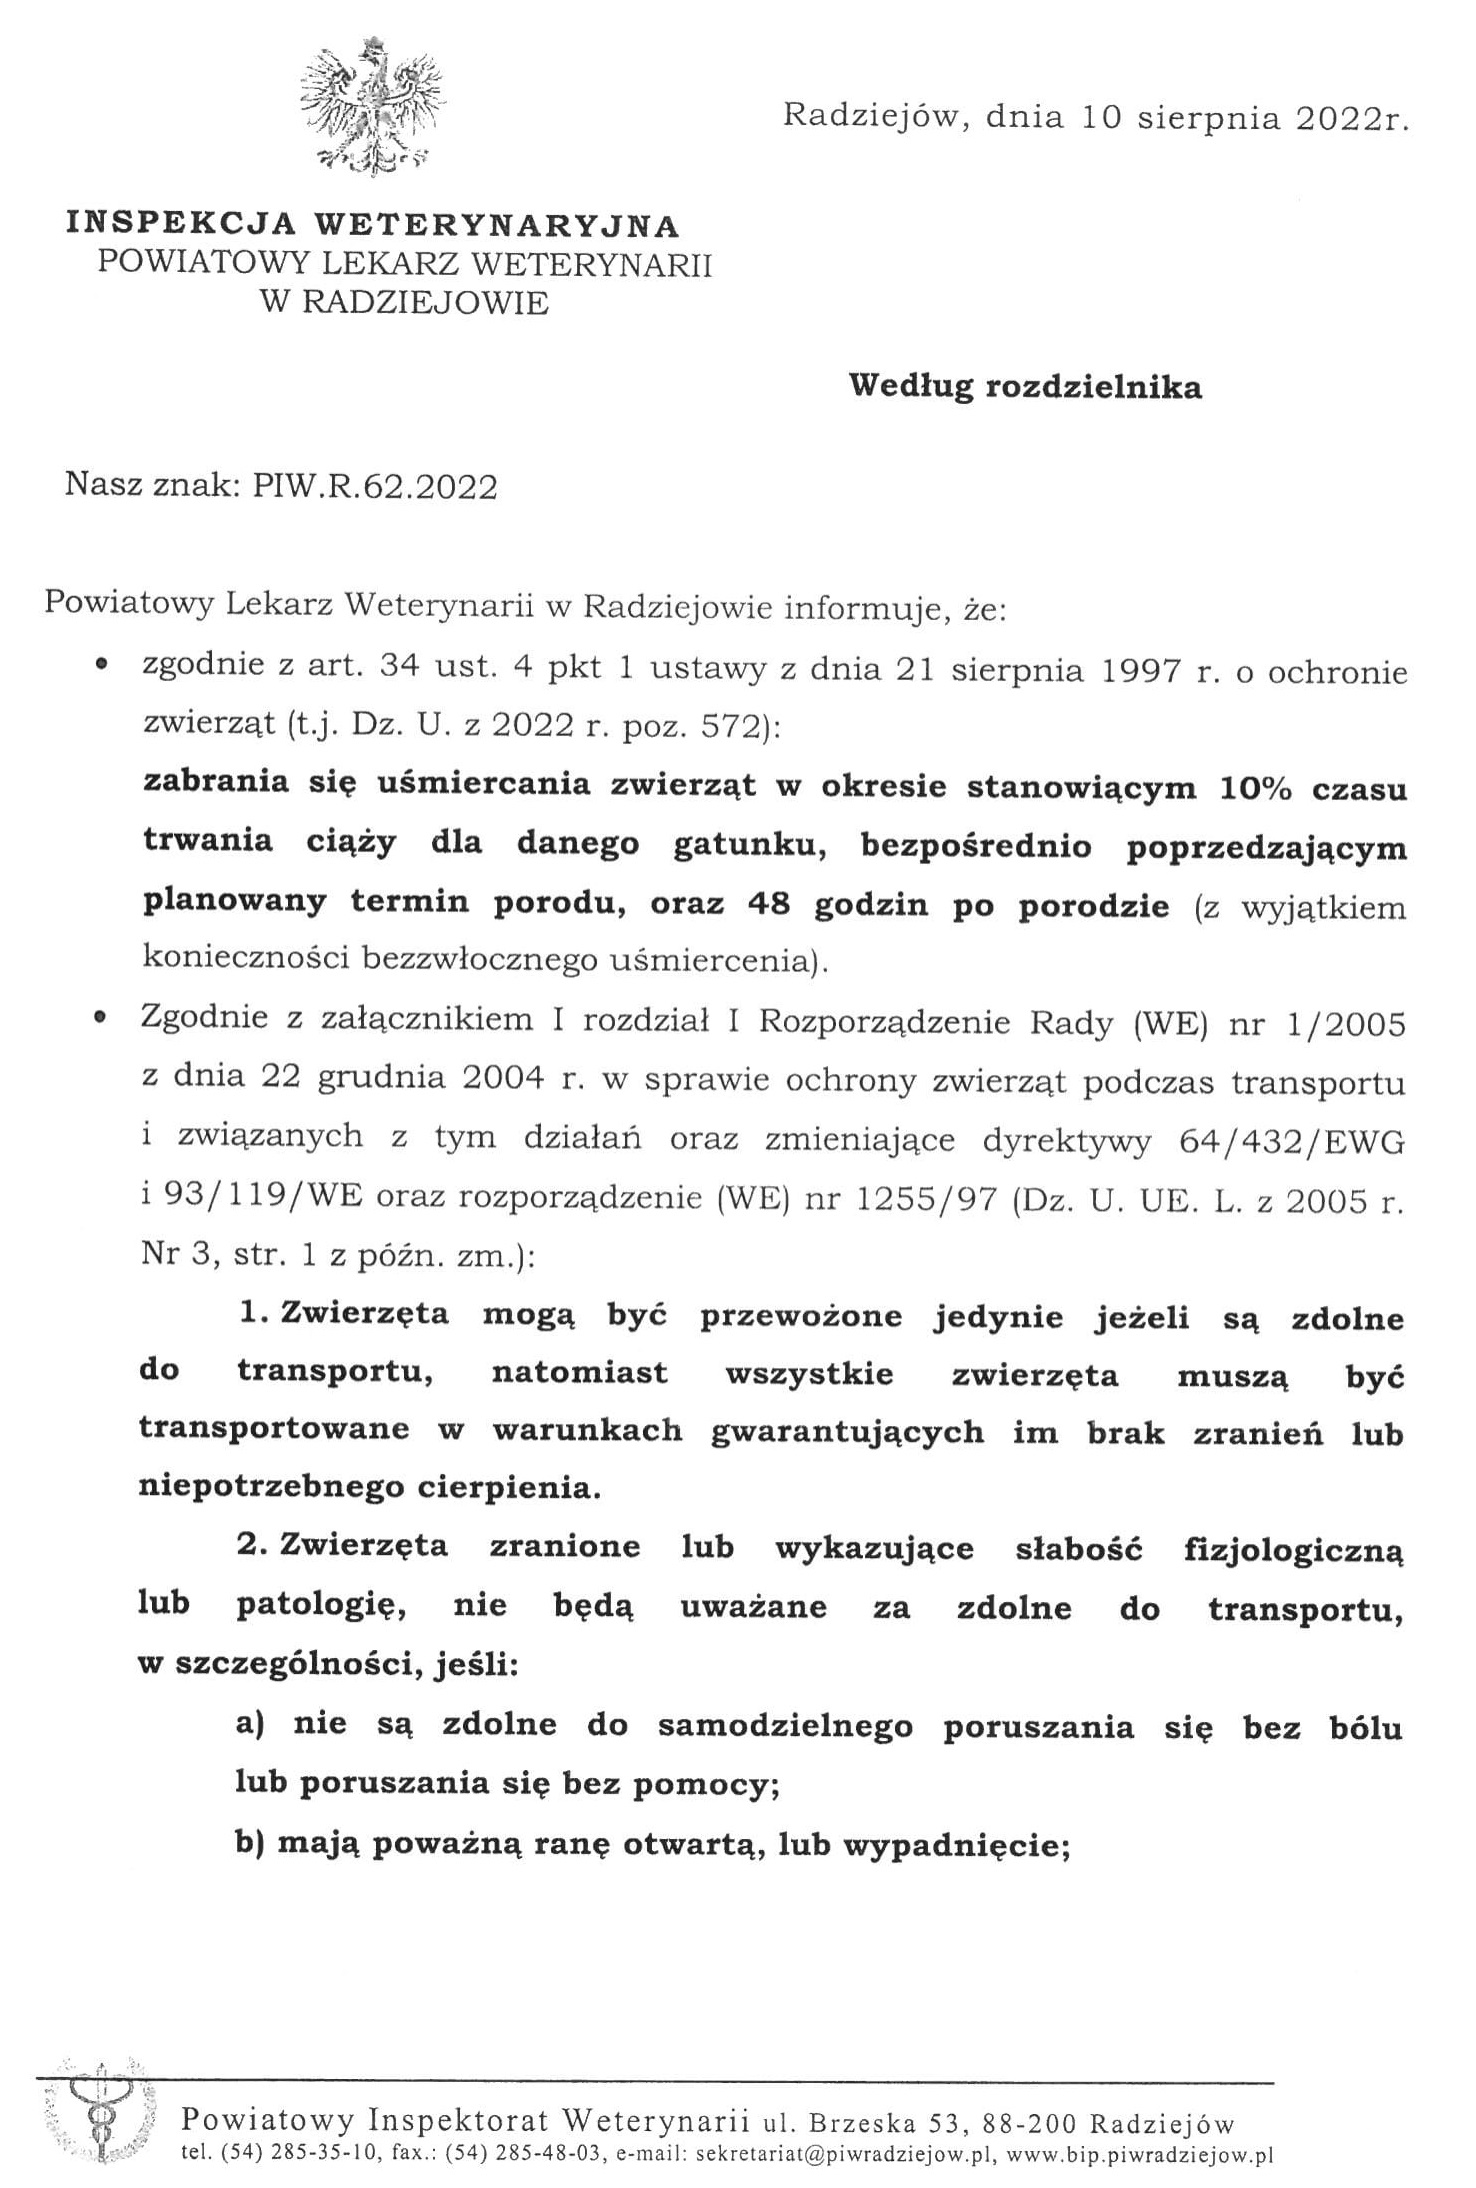 PIW.R.62.2022-1.jpg (534 KB)